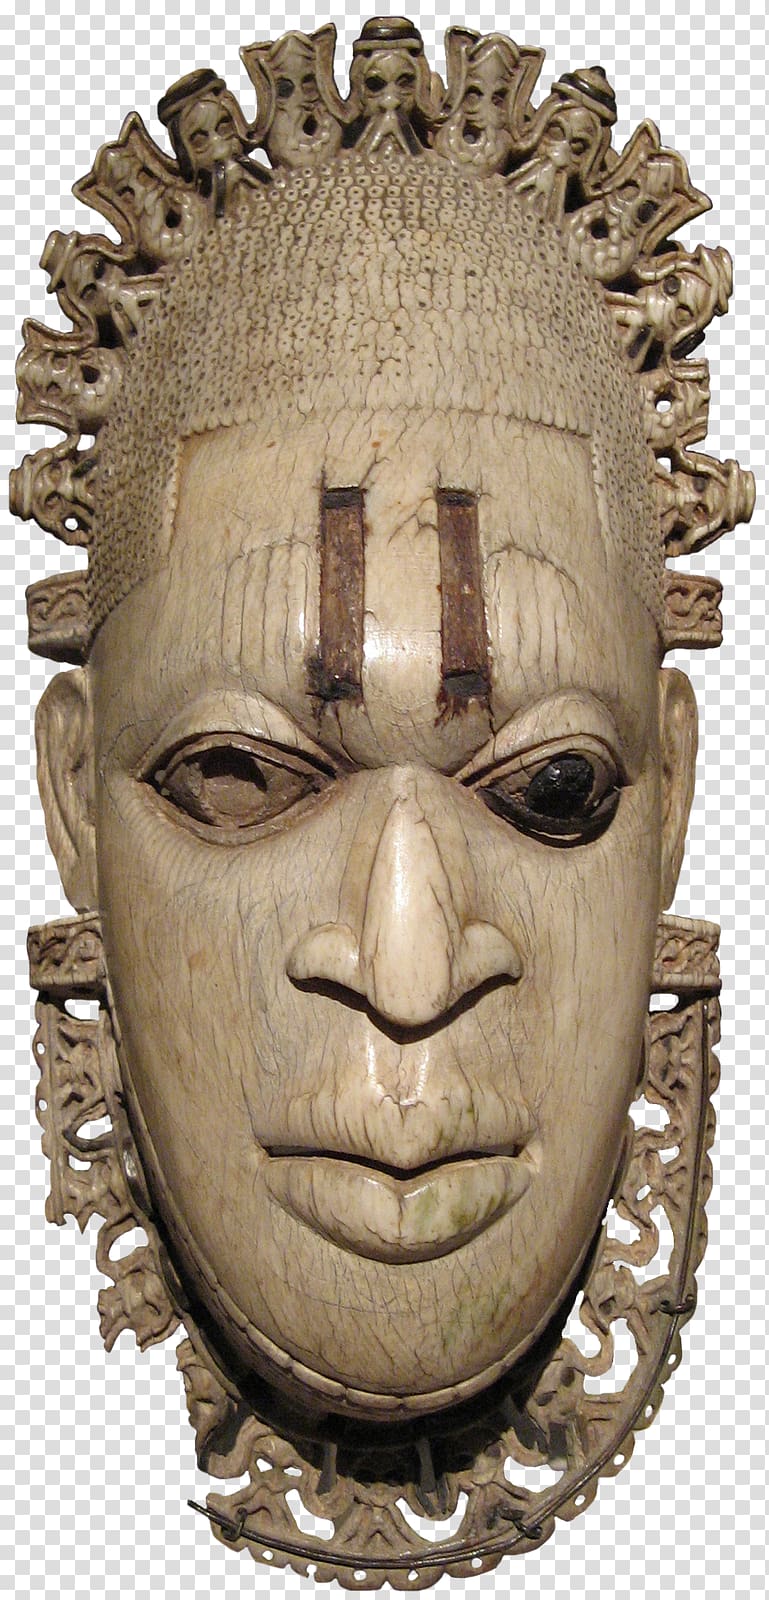 Nigeria Benin ivory mask Kingdom of Benin United States, united states transparent background PNG clipart